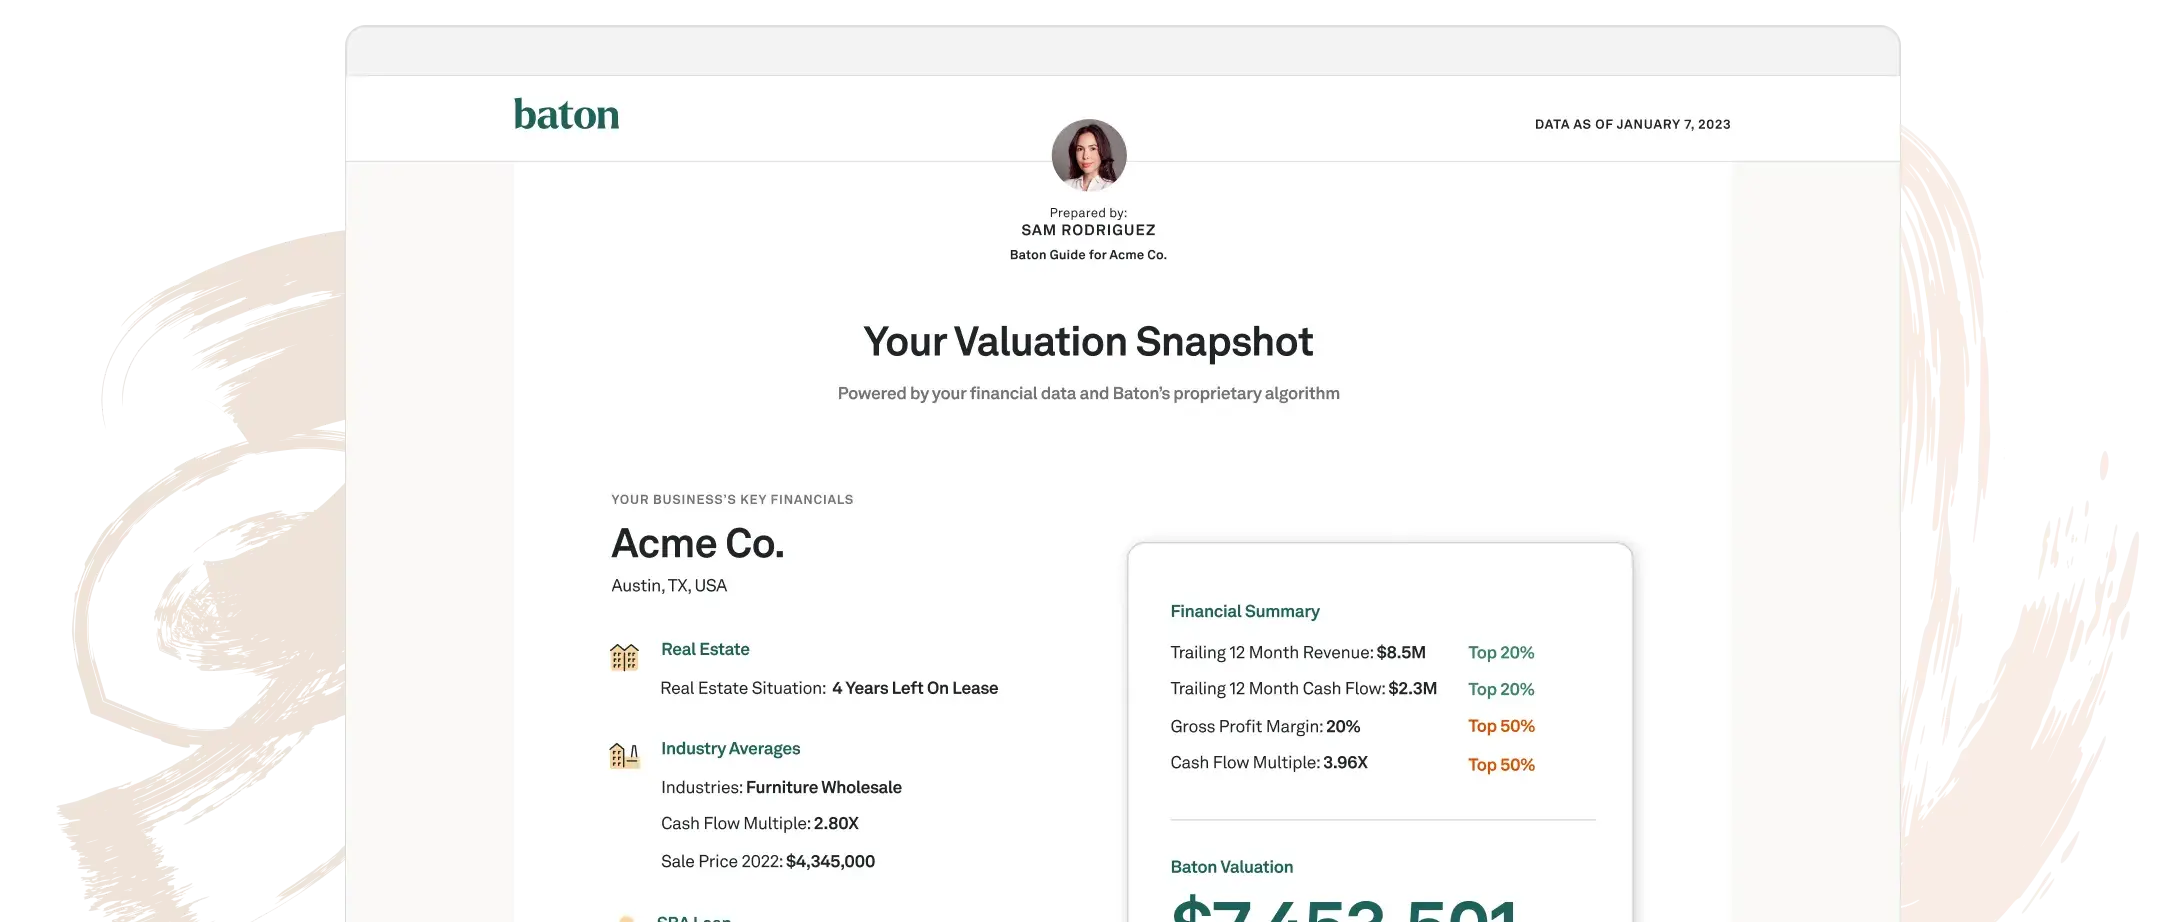 Sample Valuation Snapshot Image